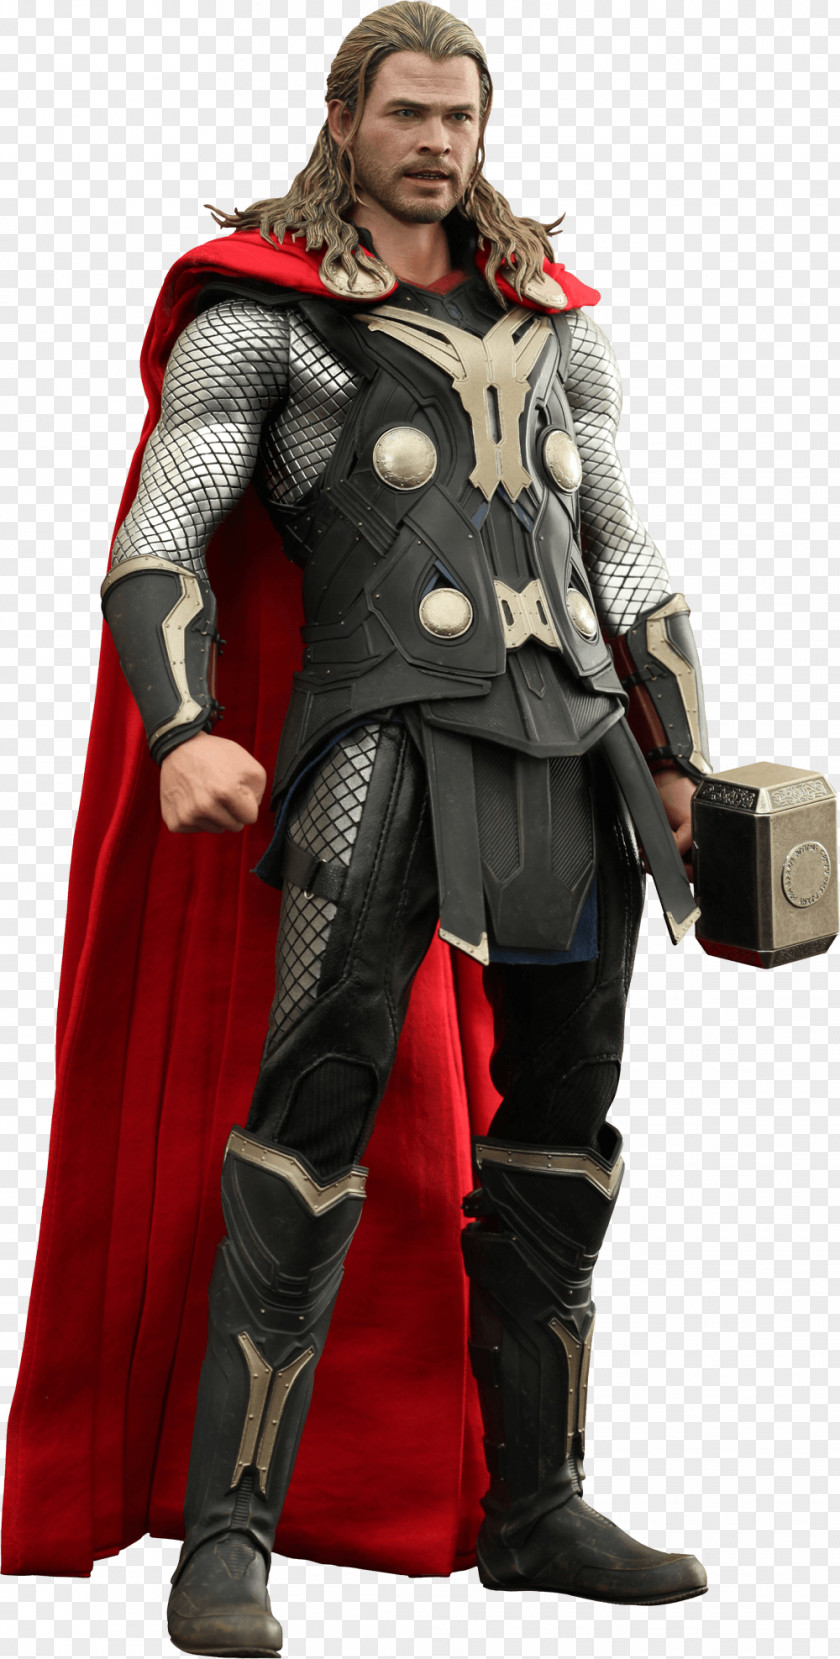 Thor Thor: The Dark World Loki Black Widow Captain America PNG